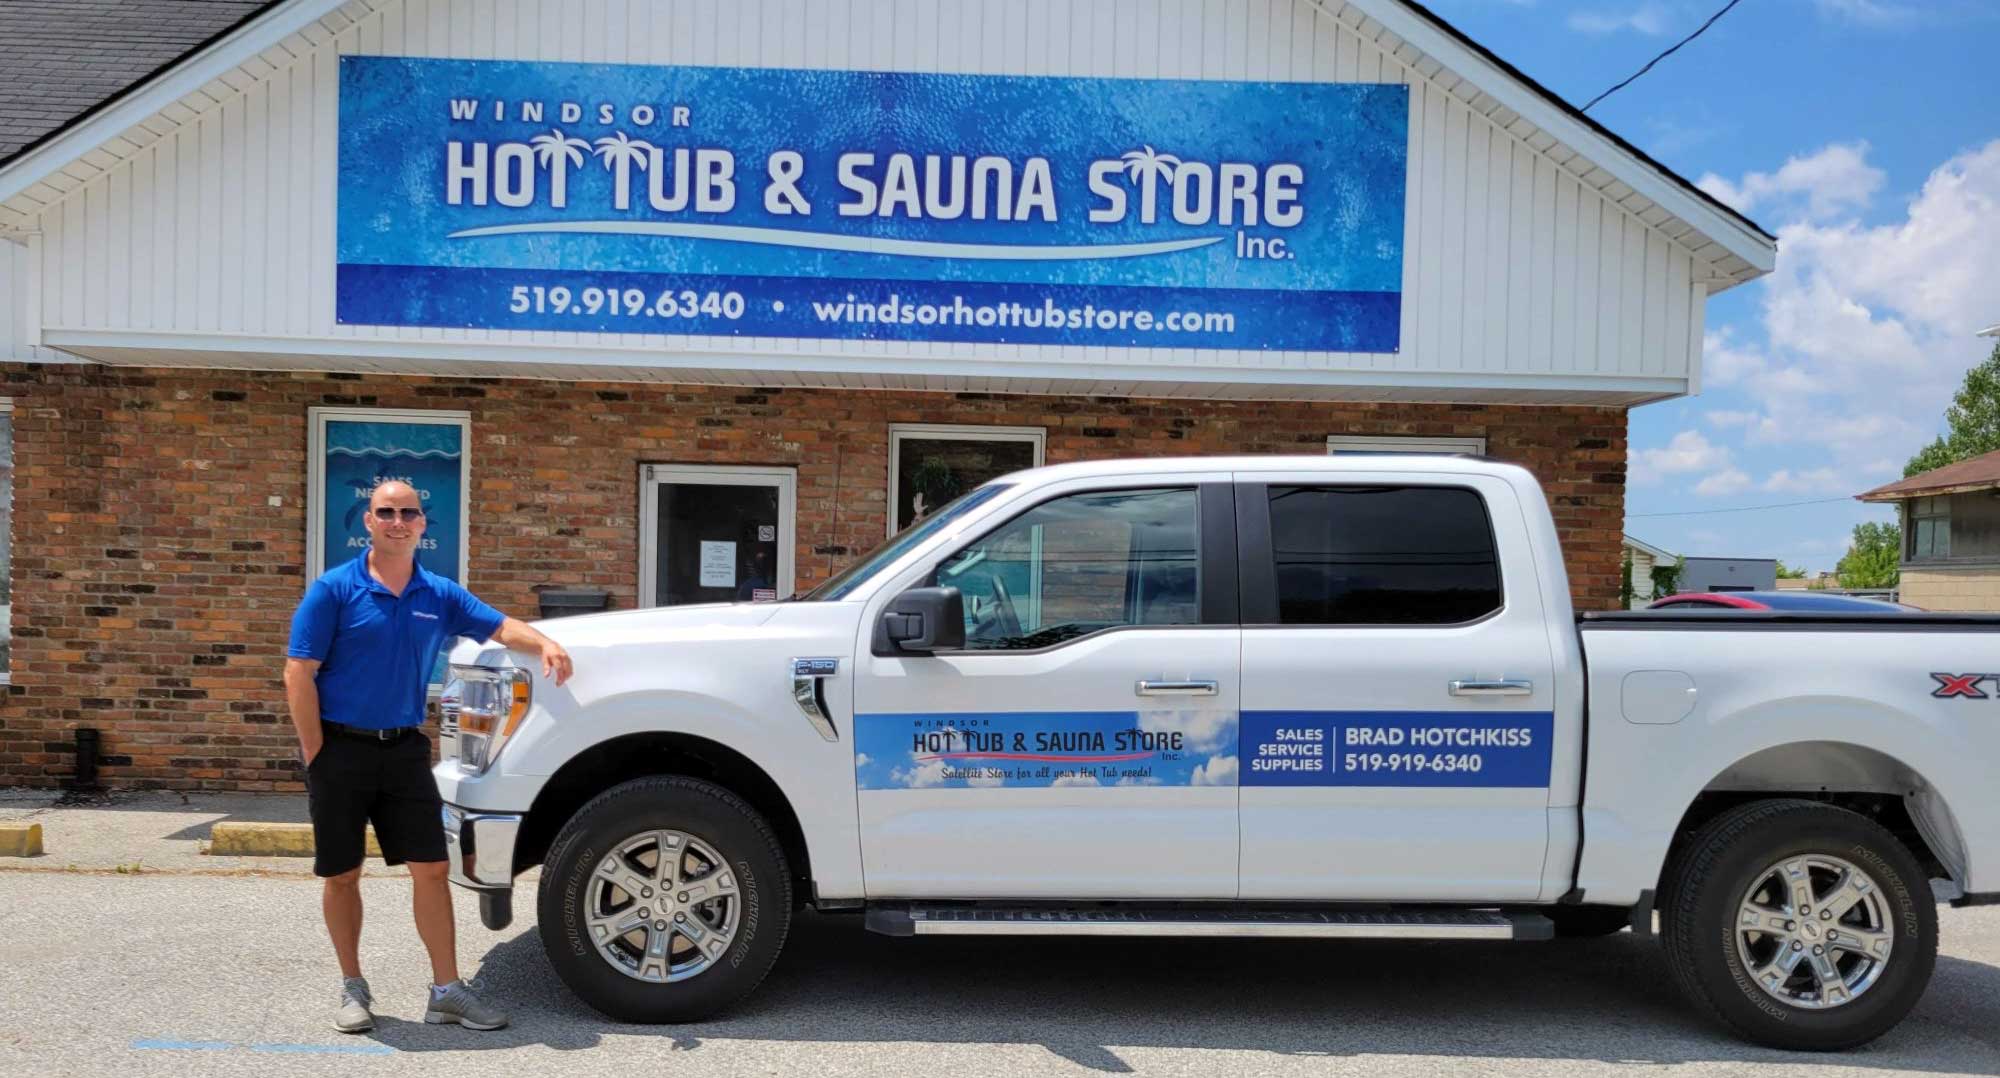 Windsor Hot Tub & Sauna Store